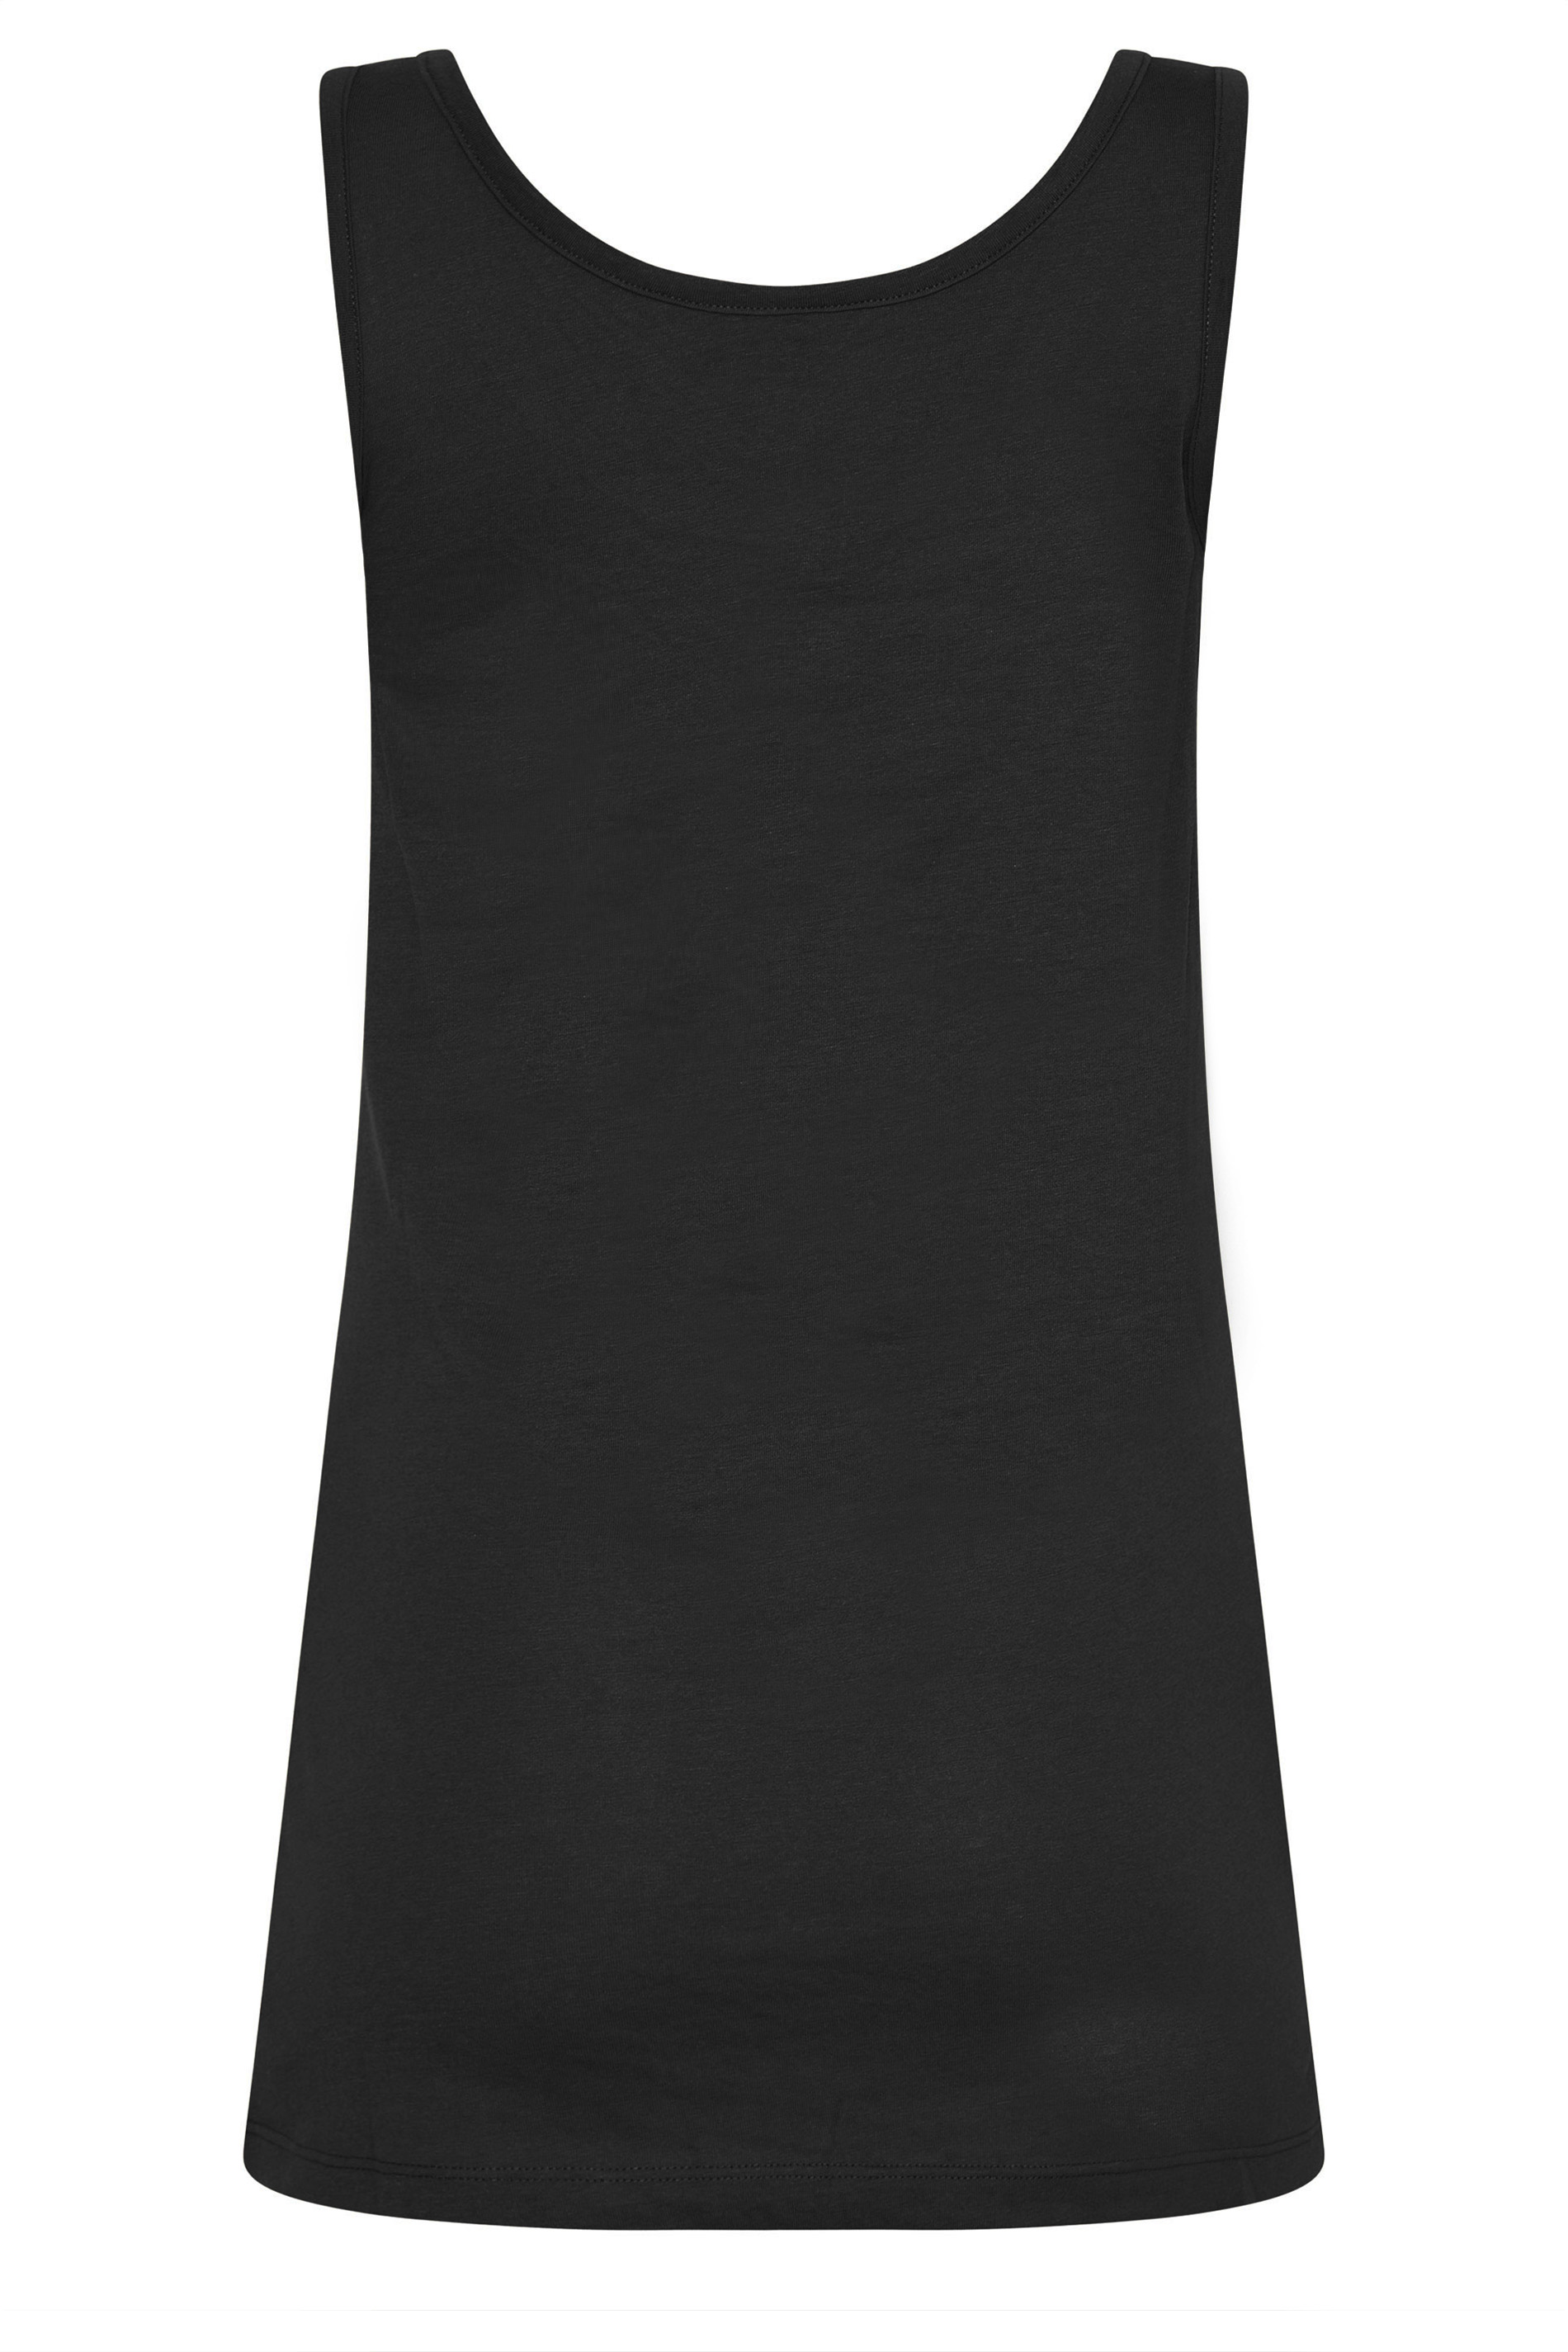 WOMEN black tank top/vest